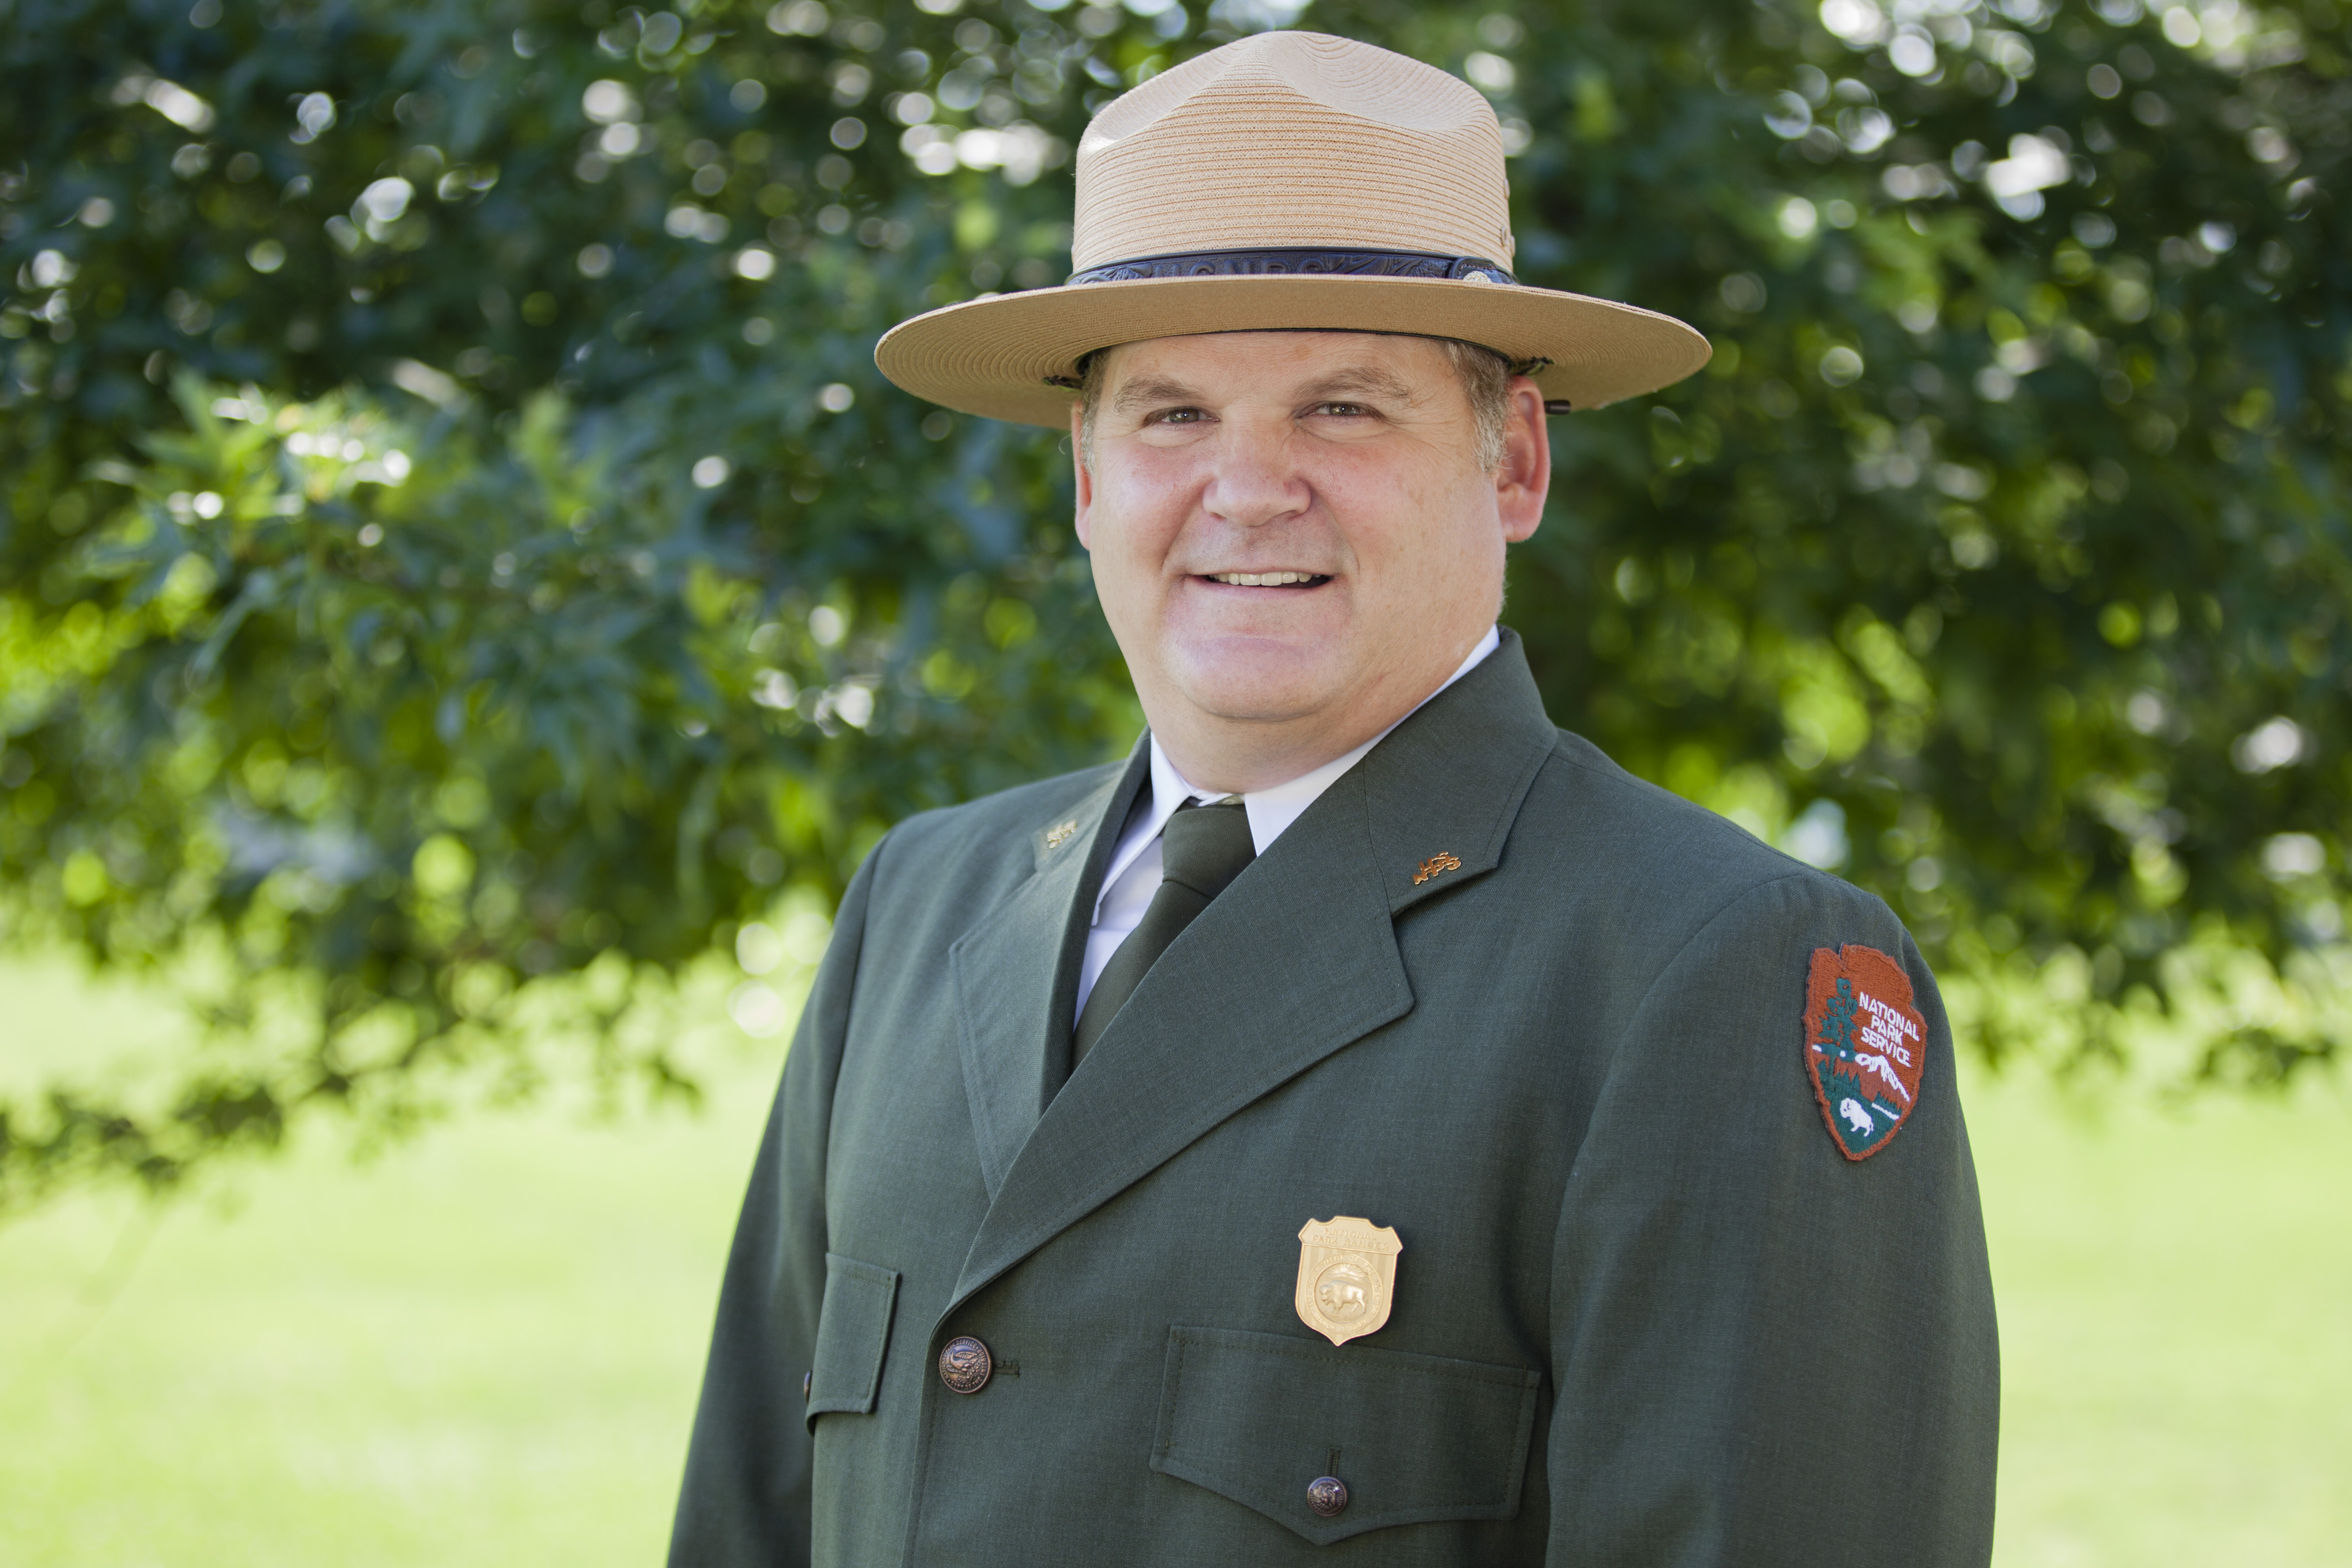 National Park Service employee in uniform